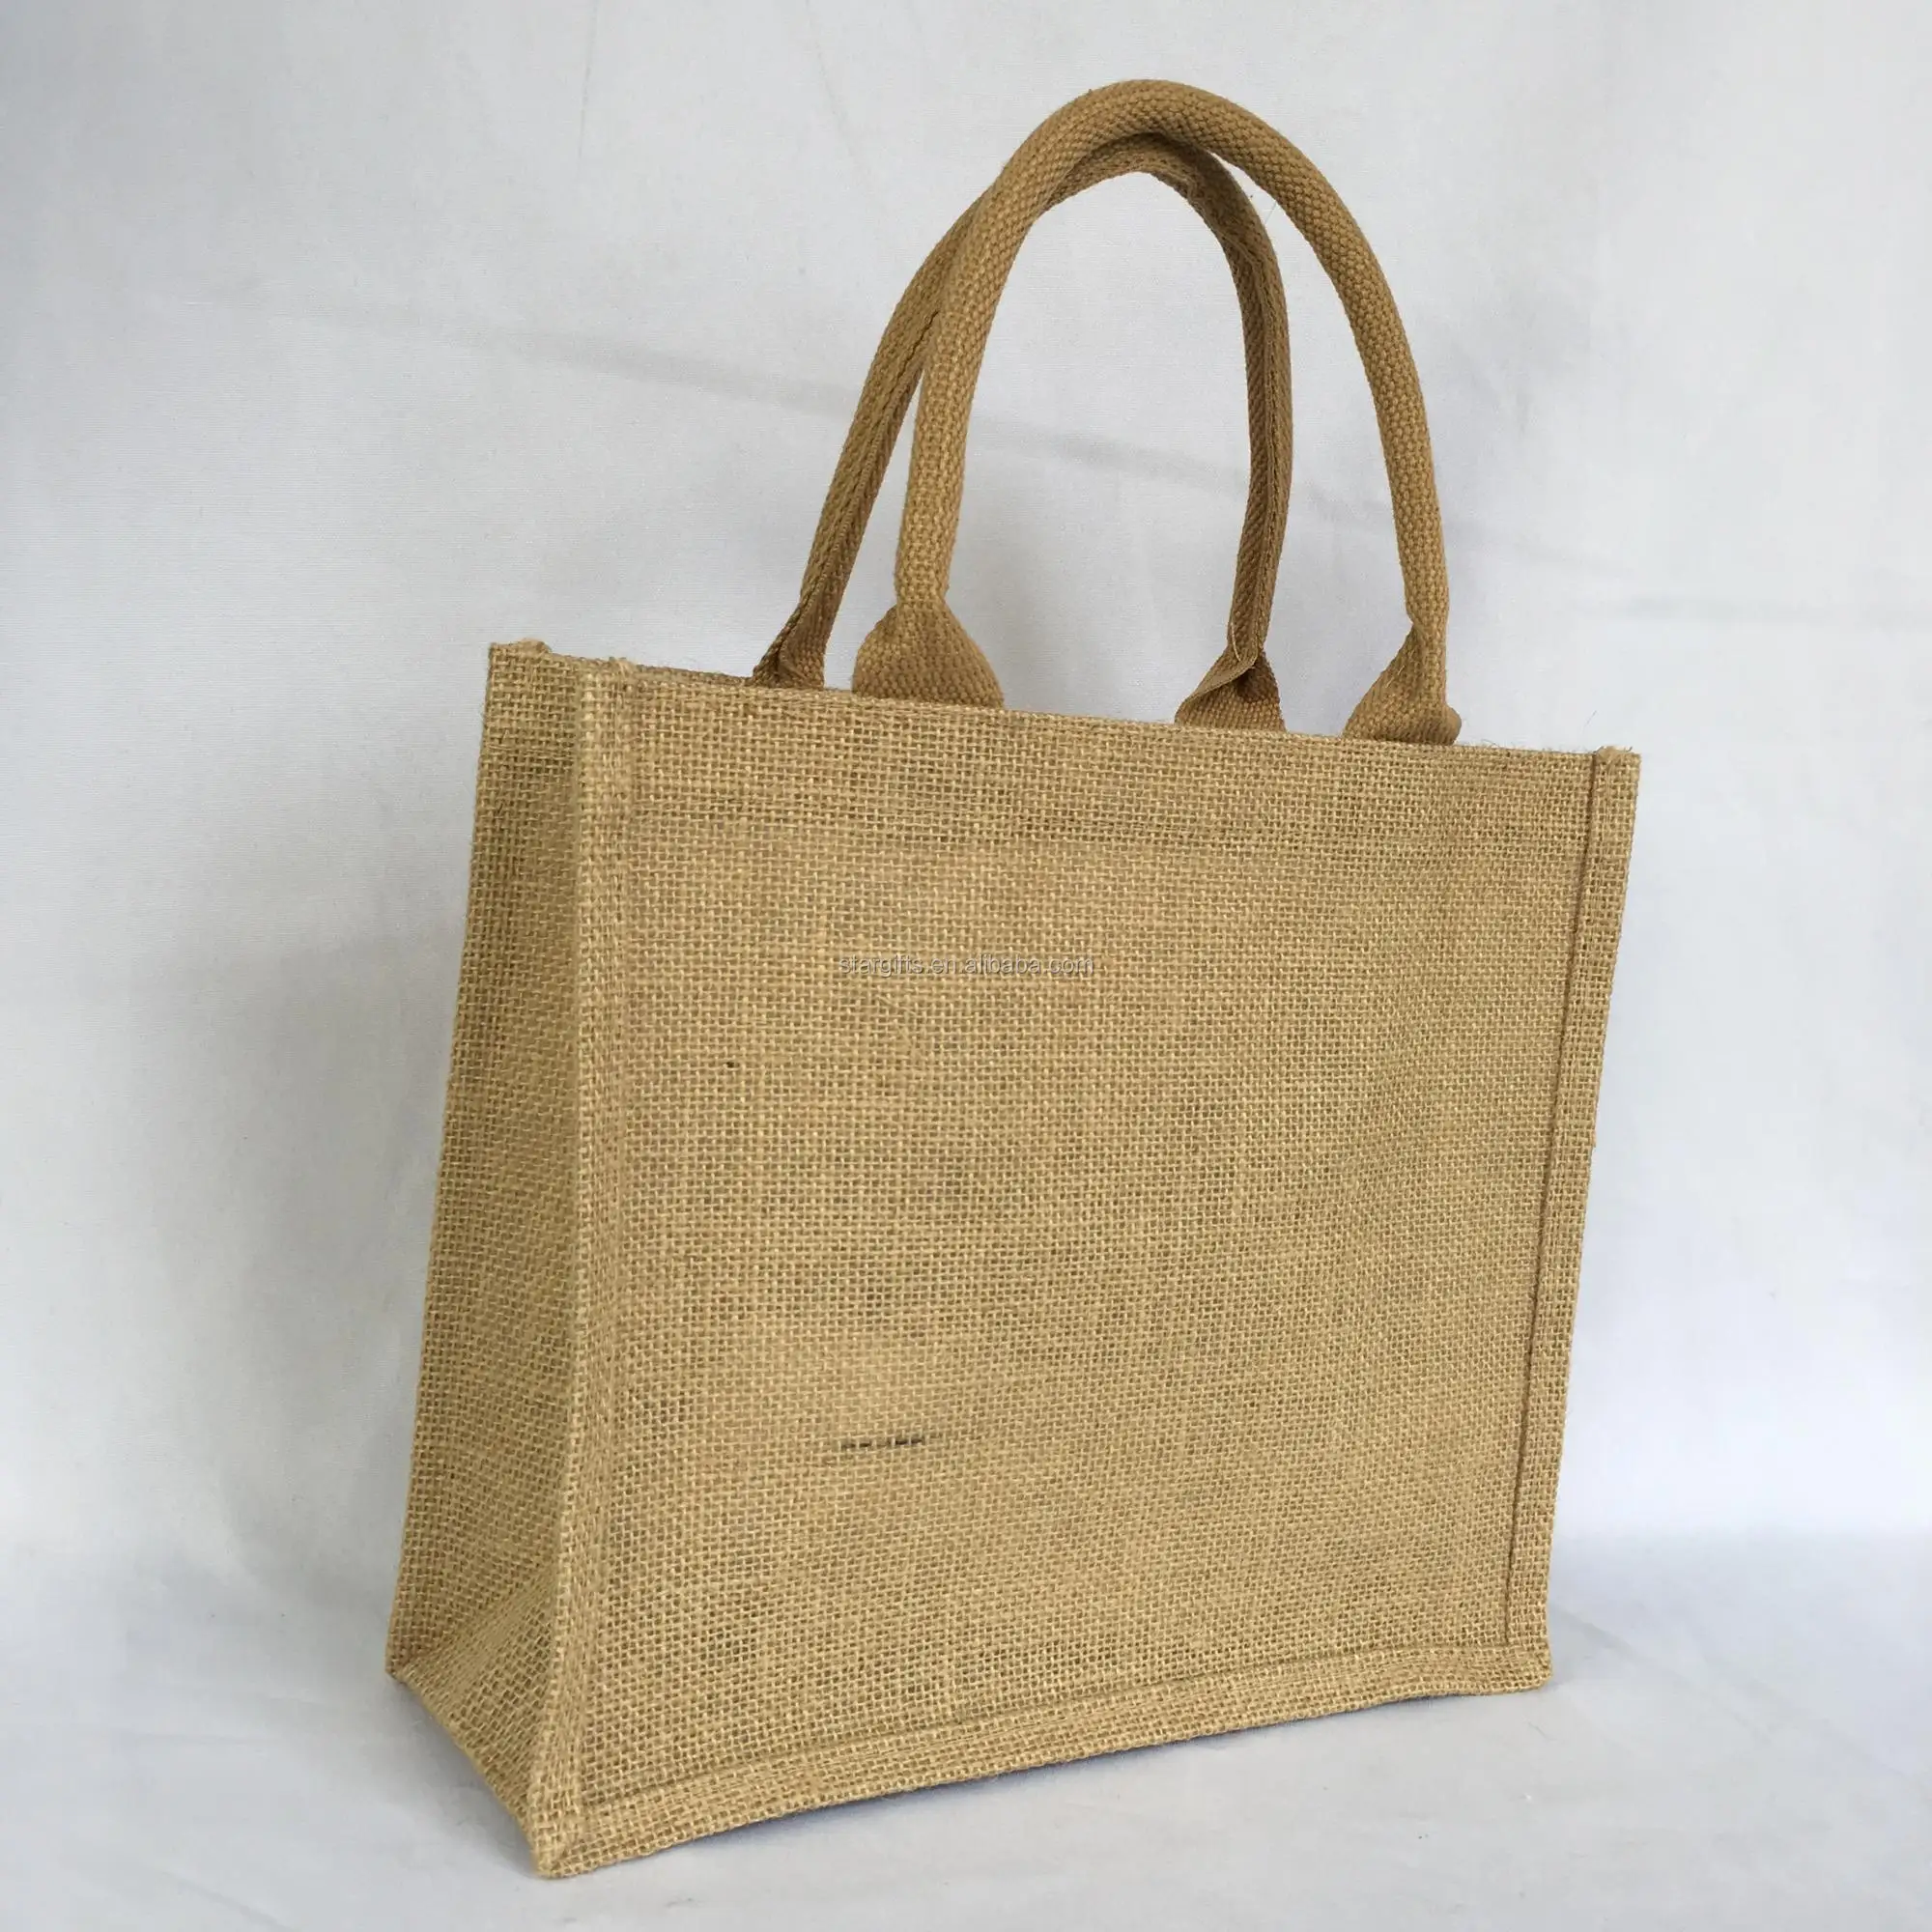 Multi-purpose Cheap Sturdy Eco-friendly Hemp Linen Jute Beach Bag - Buy ...